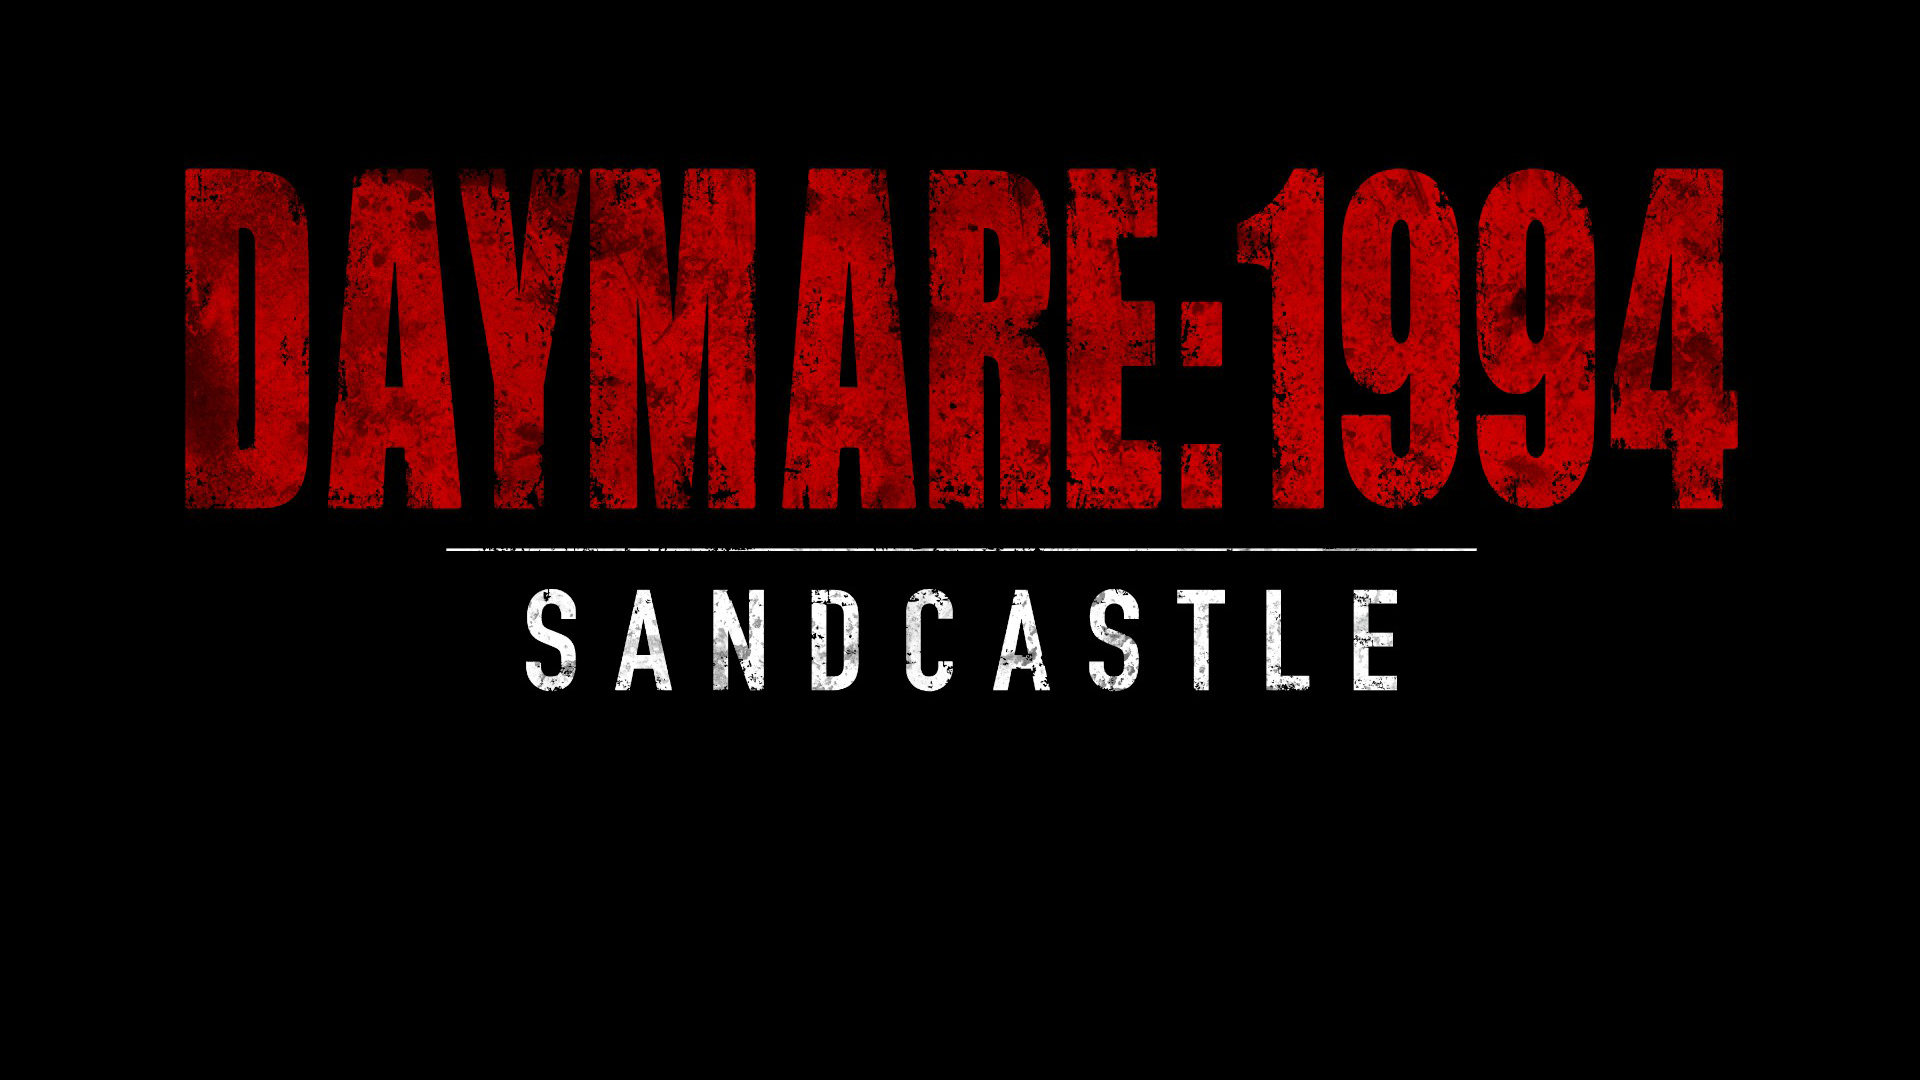 Daymare 1944 sandcastle